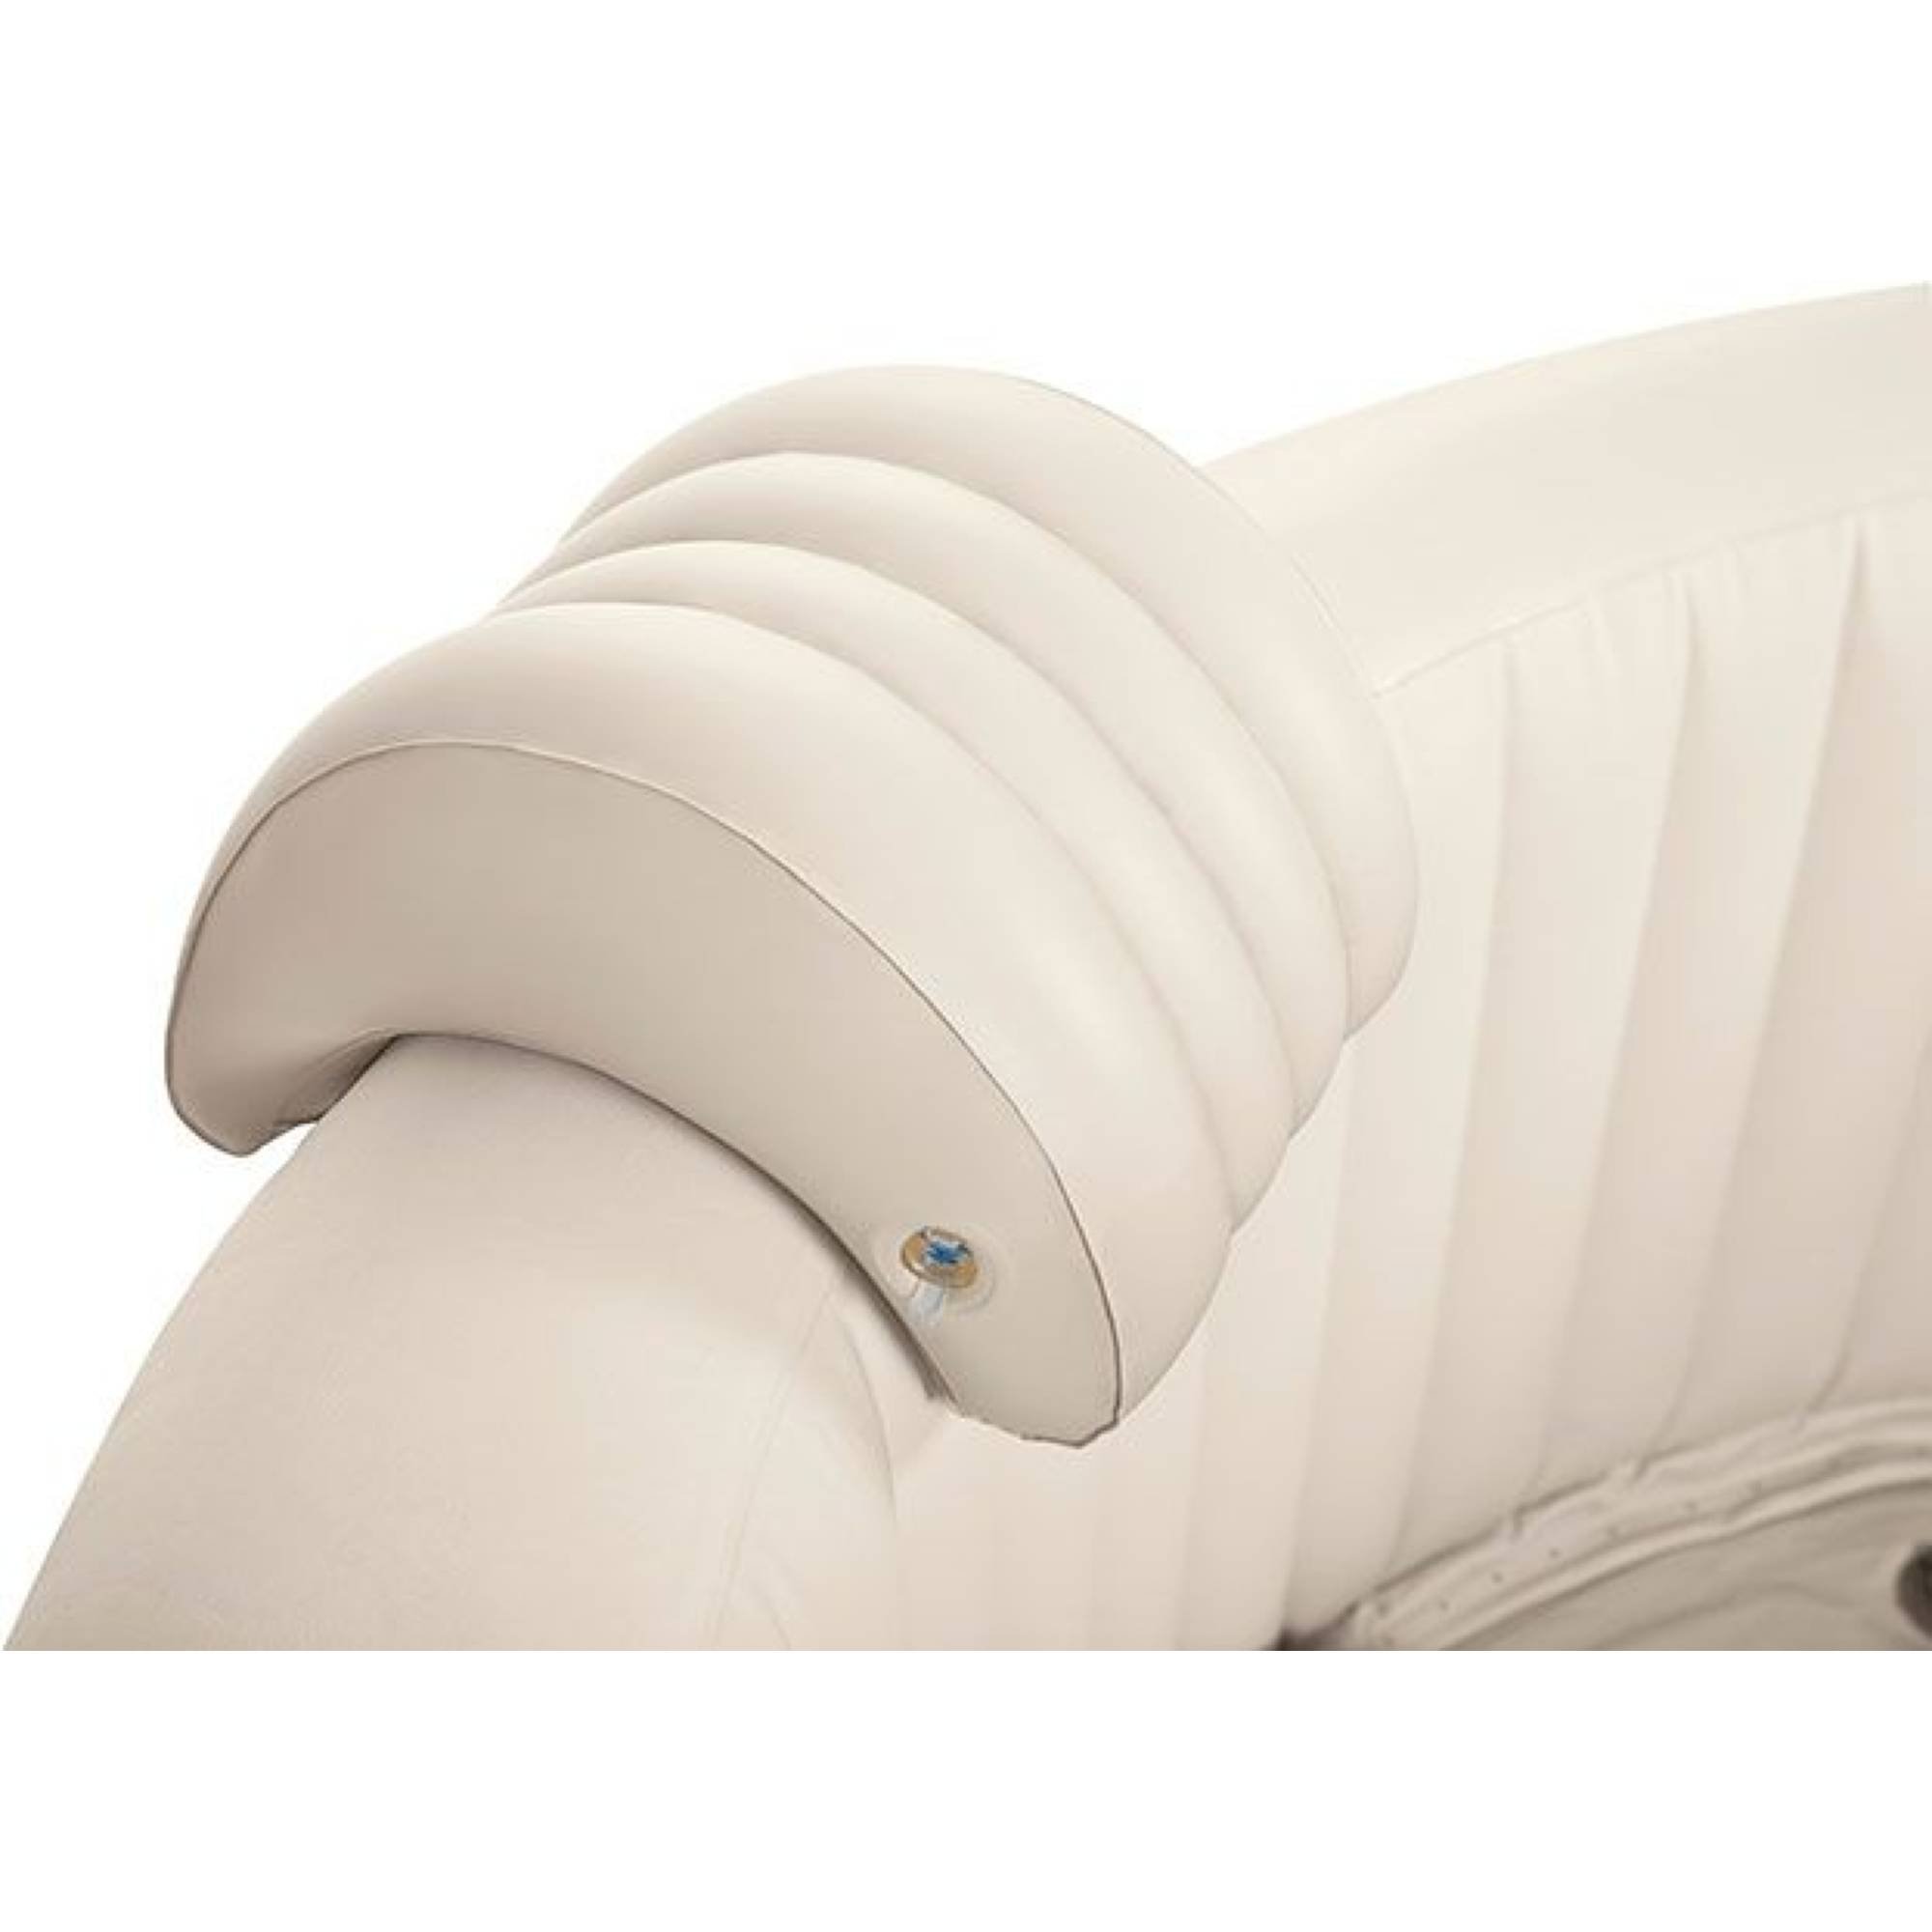 Intex Spa Headrest 39 x 30 x 23 cm